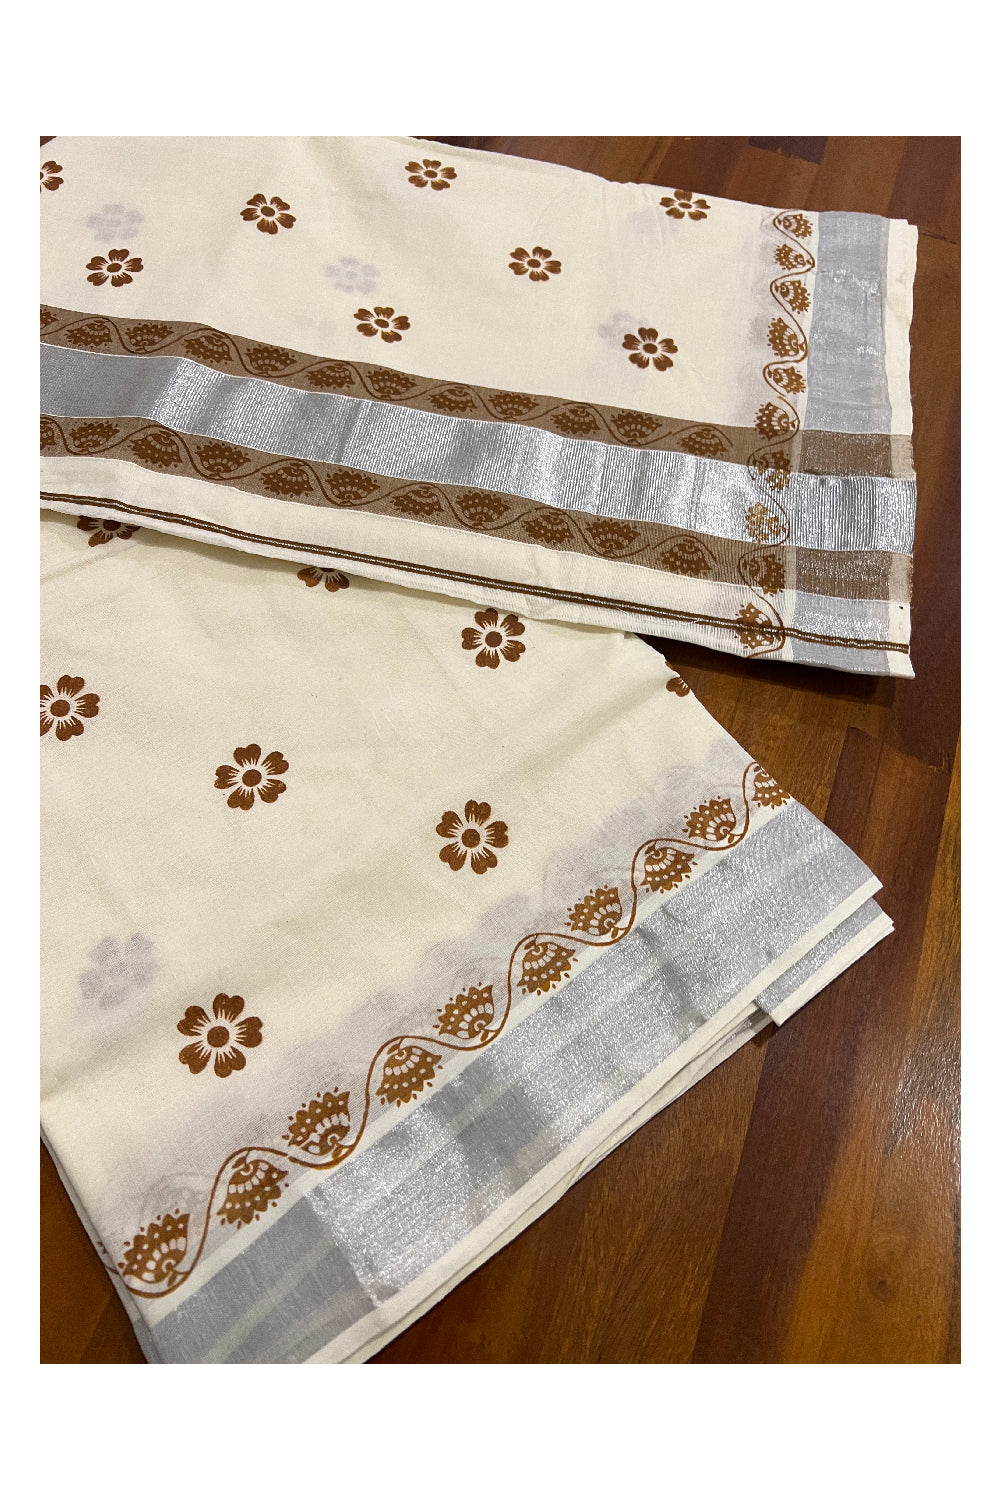 Pure Cotton Kerala Saree with Brown Block Printed Floral Design and Silver Kasavu Border